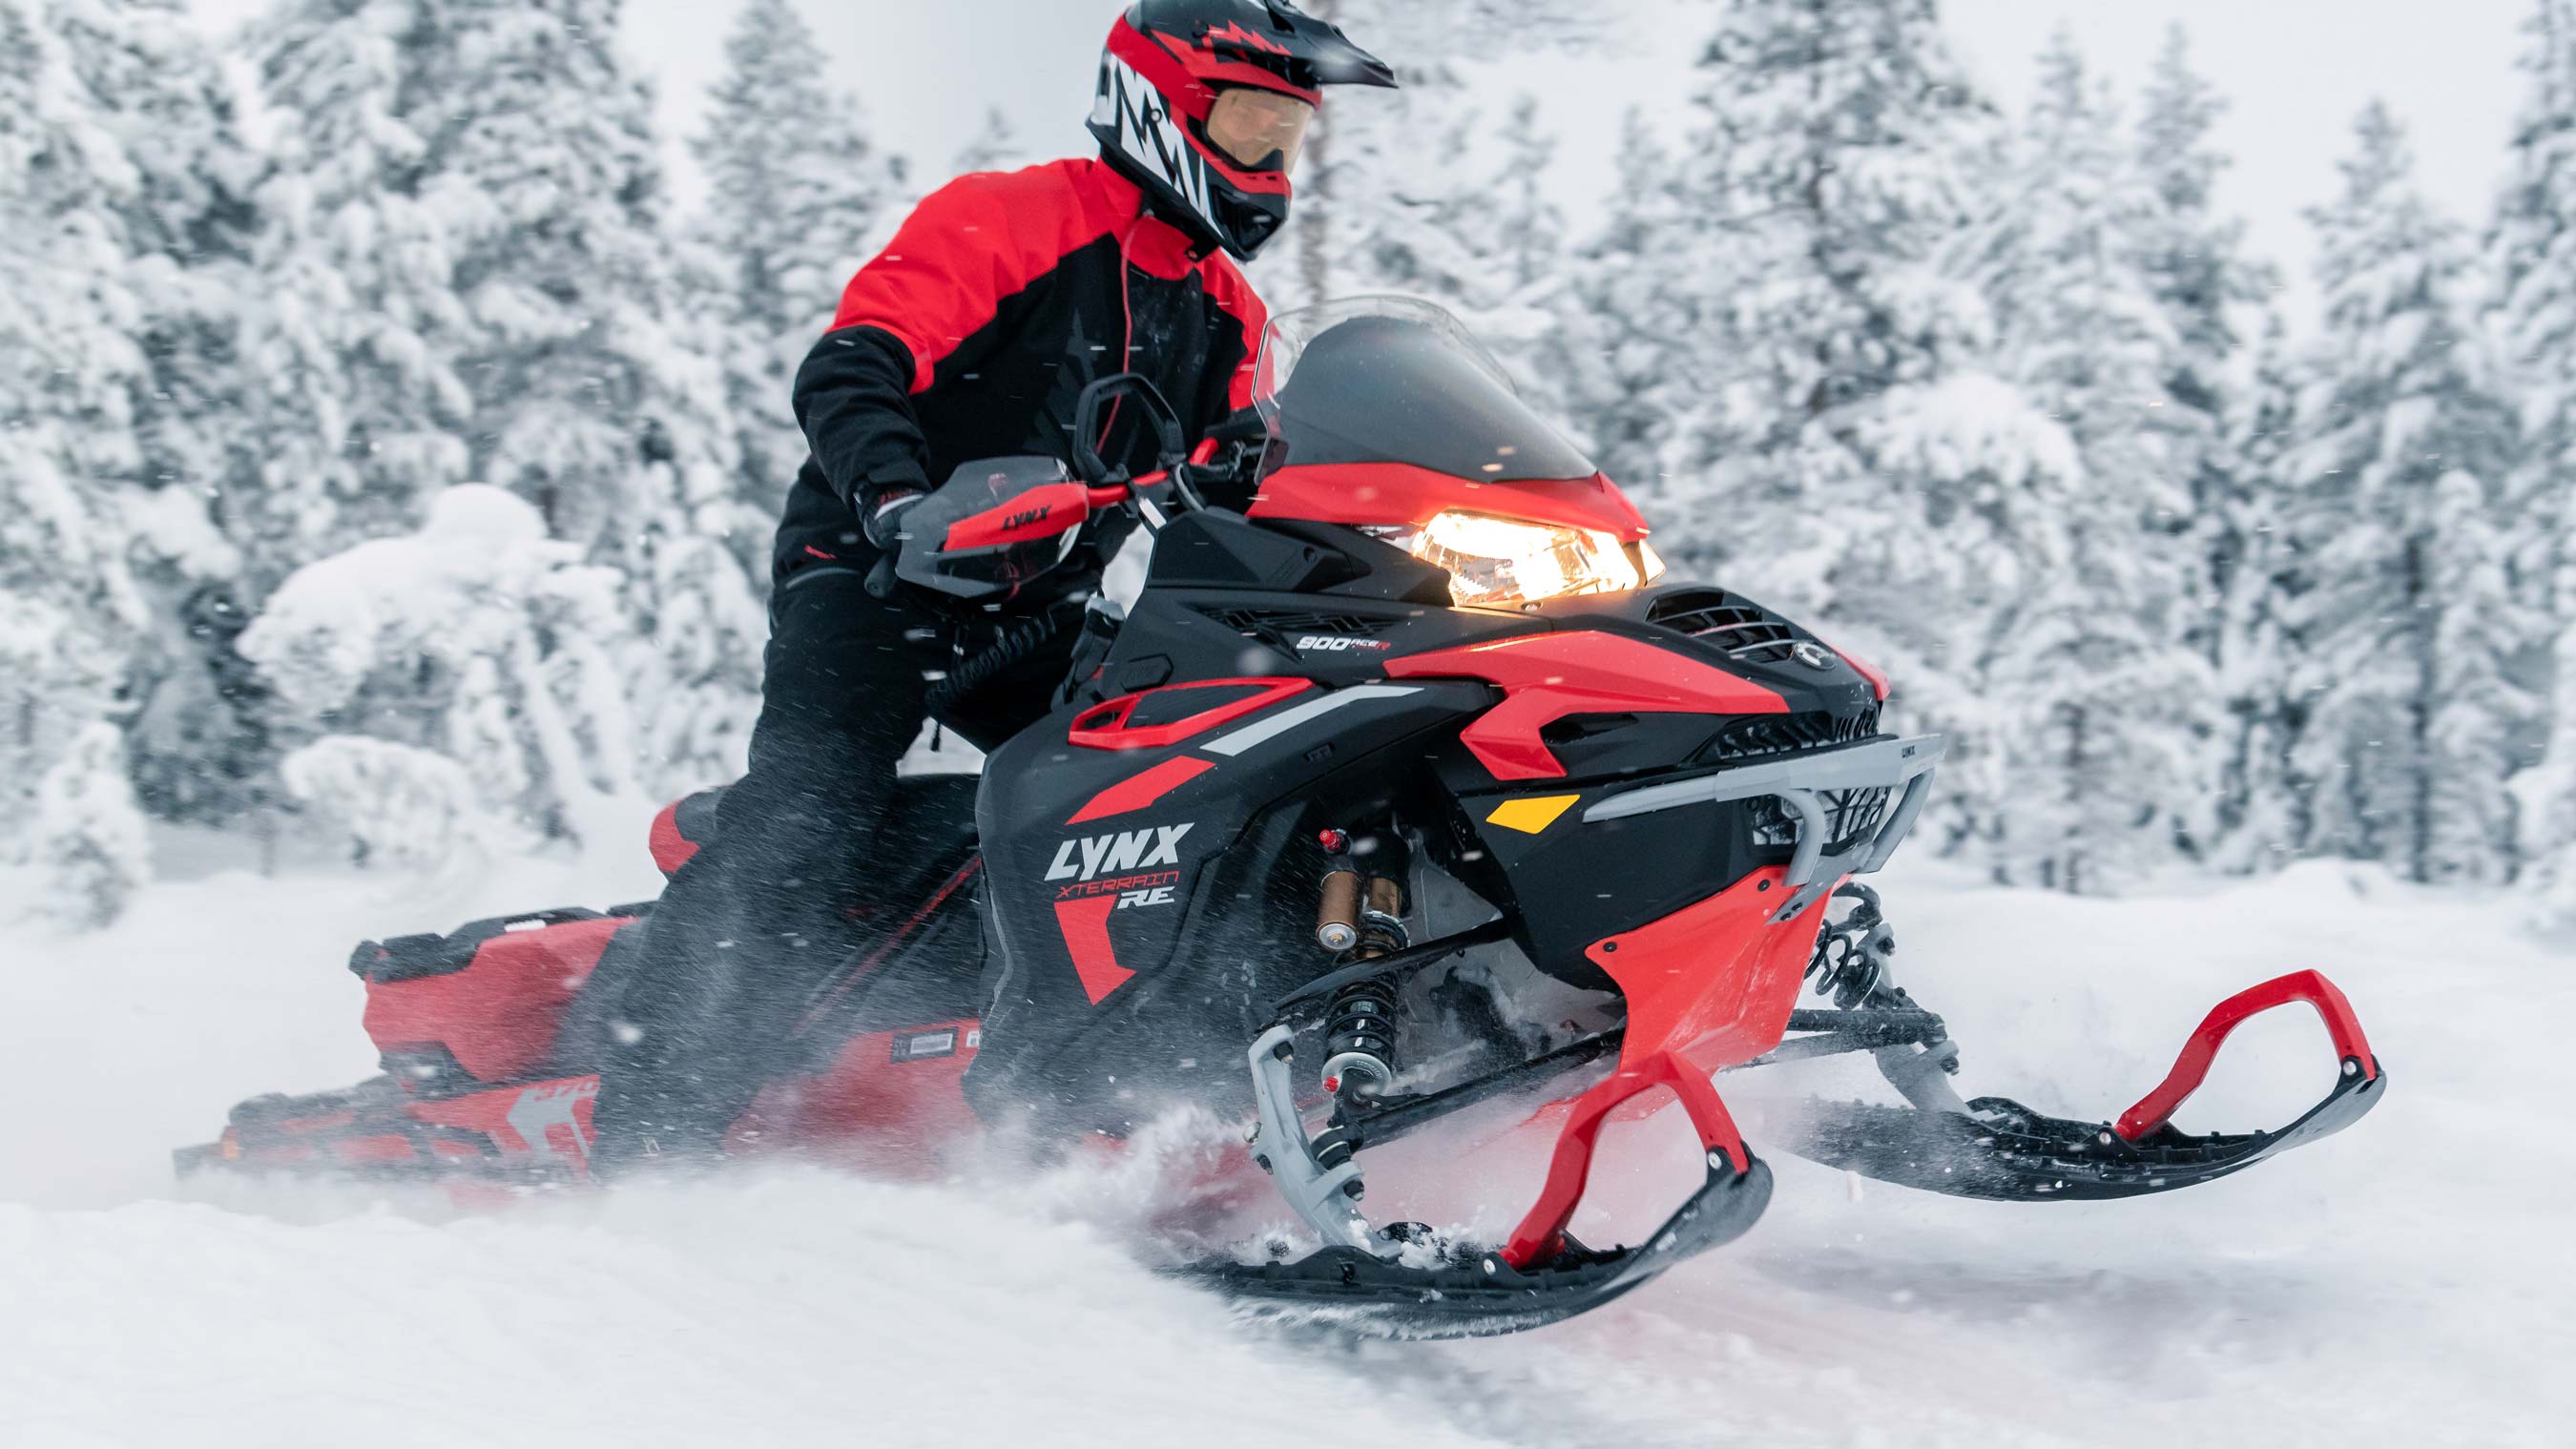 Lynx Xterrain RE snowmobile riding in snowy forest